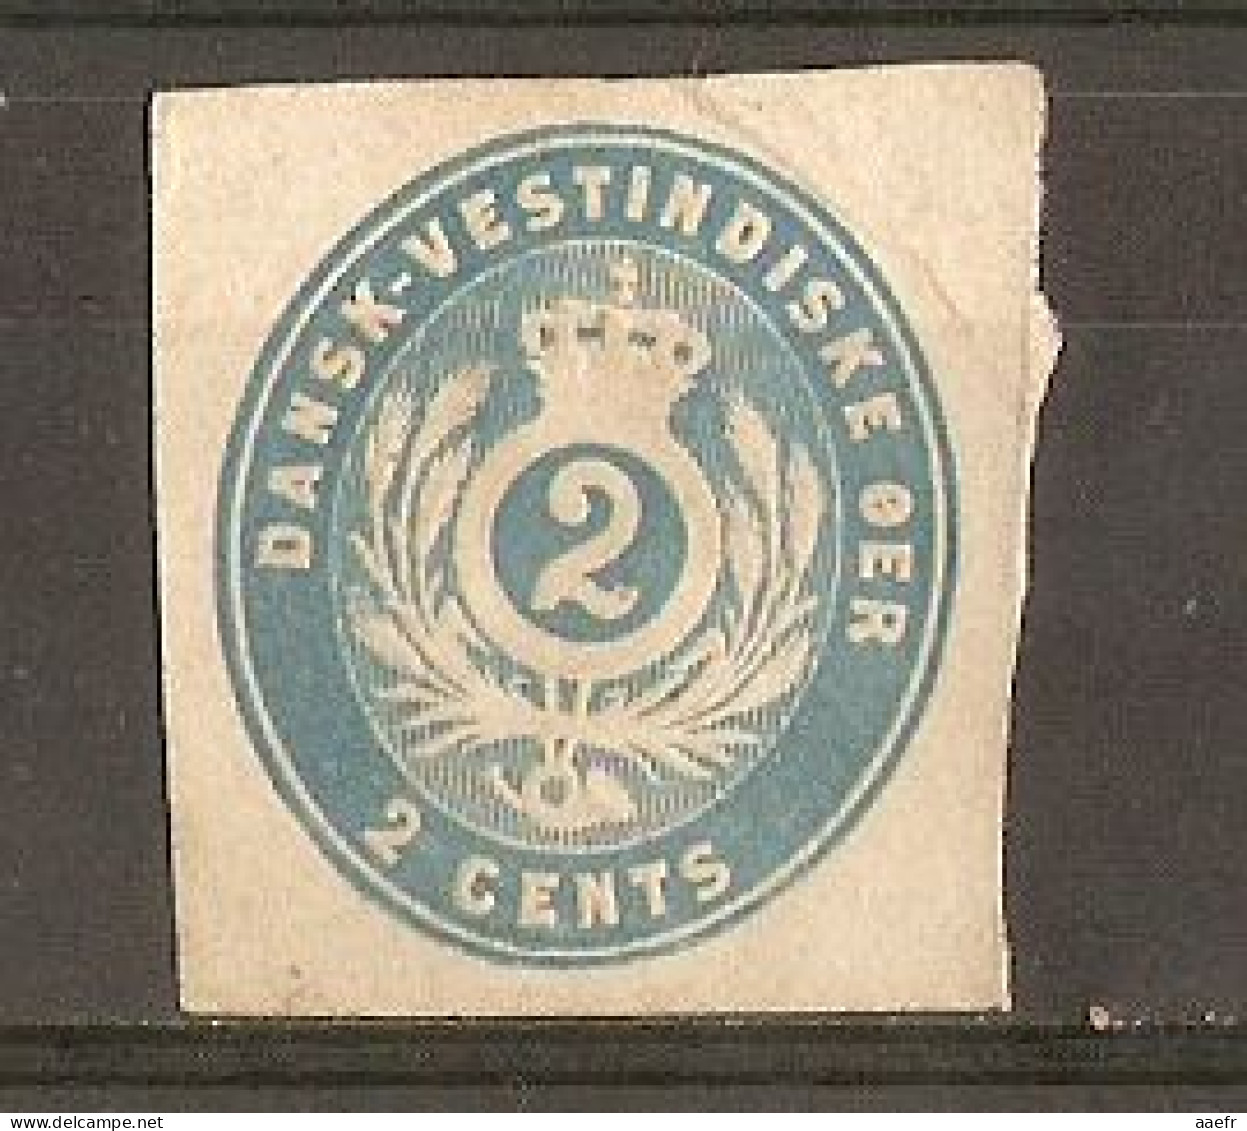 Danemark 1878 - Danish West Indies - Dansk-Vestindiske OER - 2 Cents Light Blue - Postal Stationery Cut - Fragment EP - Dänische Antillen (Westindien)